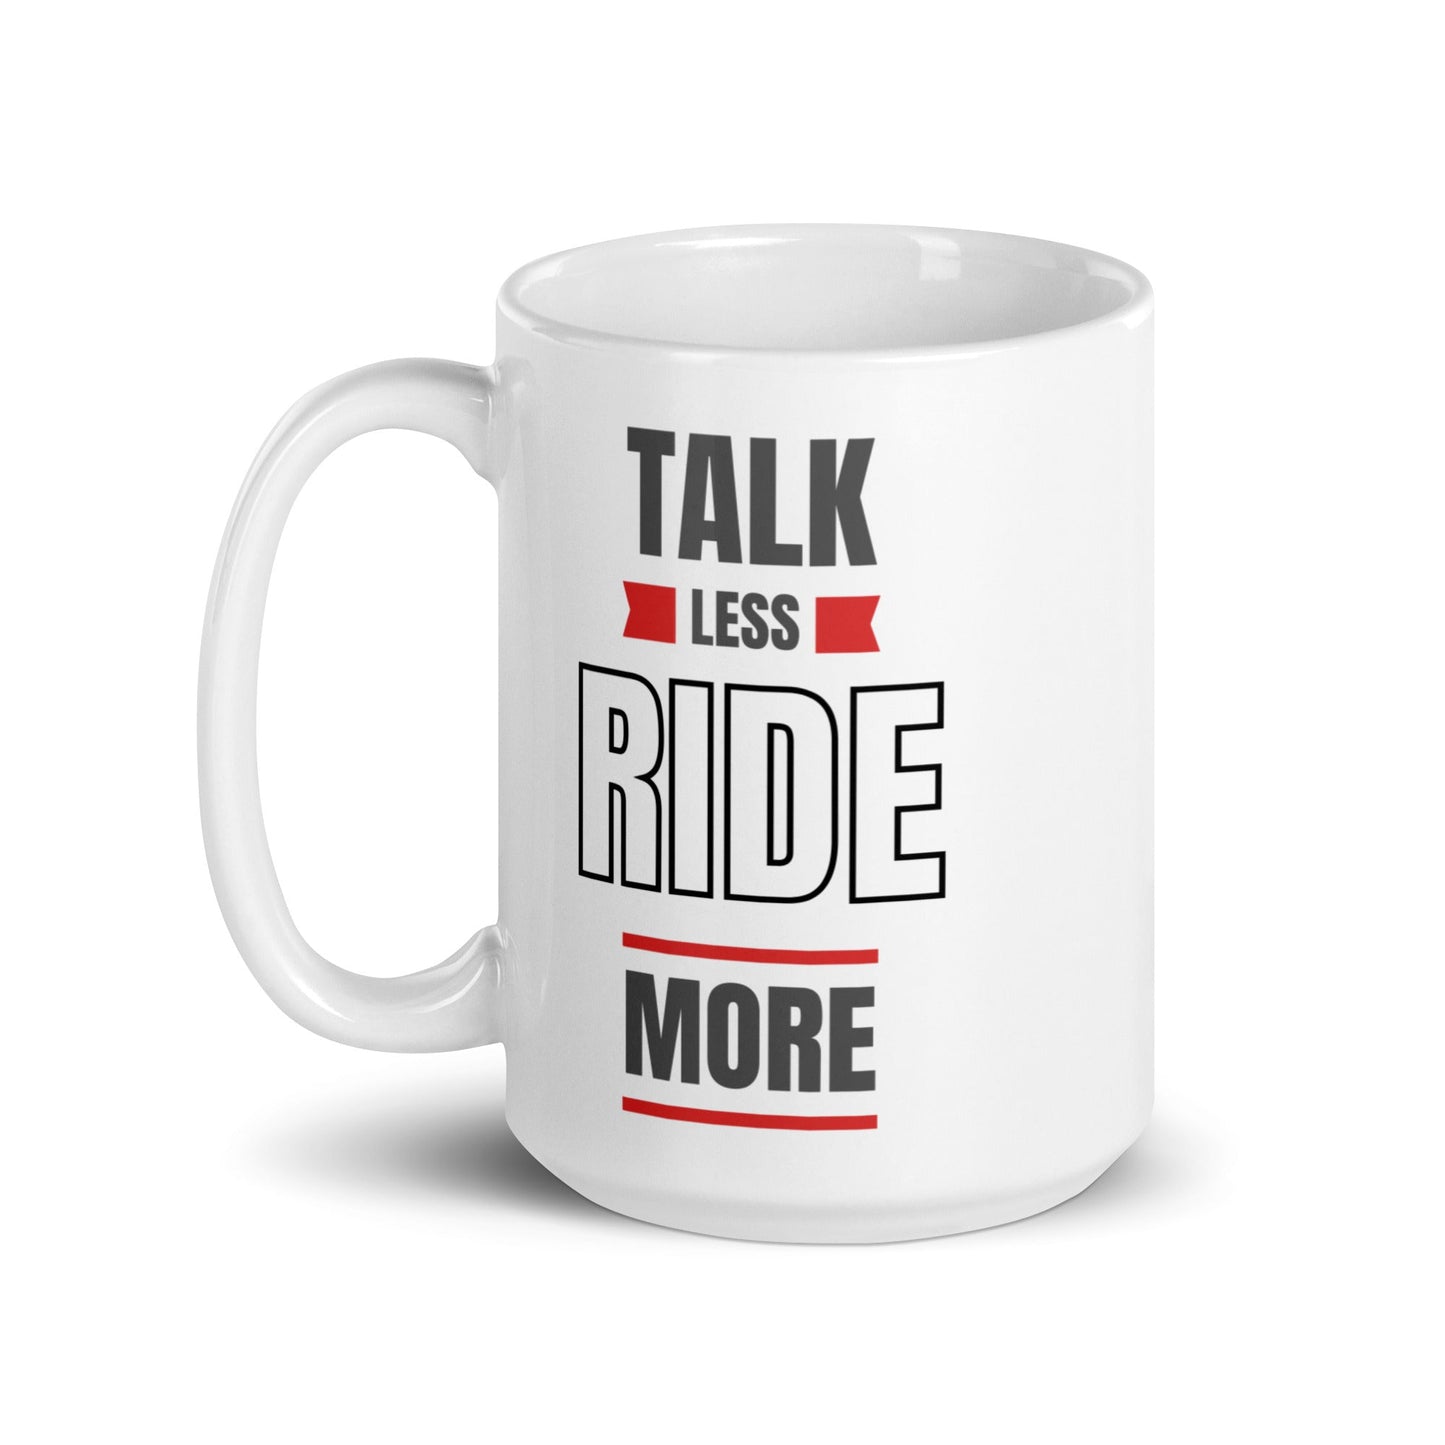 White glossy mug - Ride More - The Vandi Company